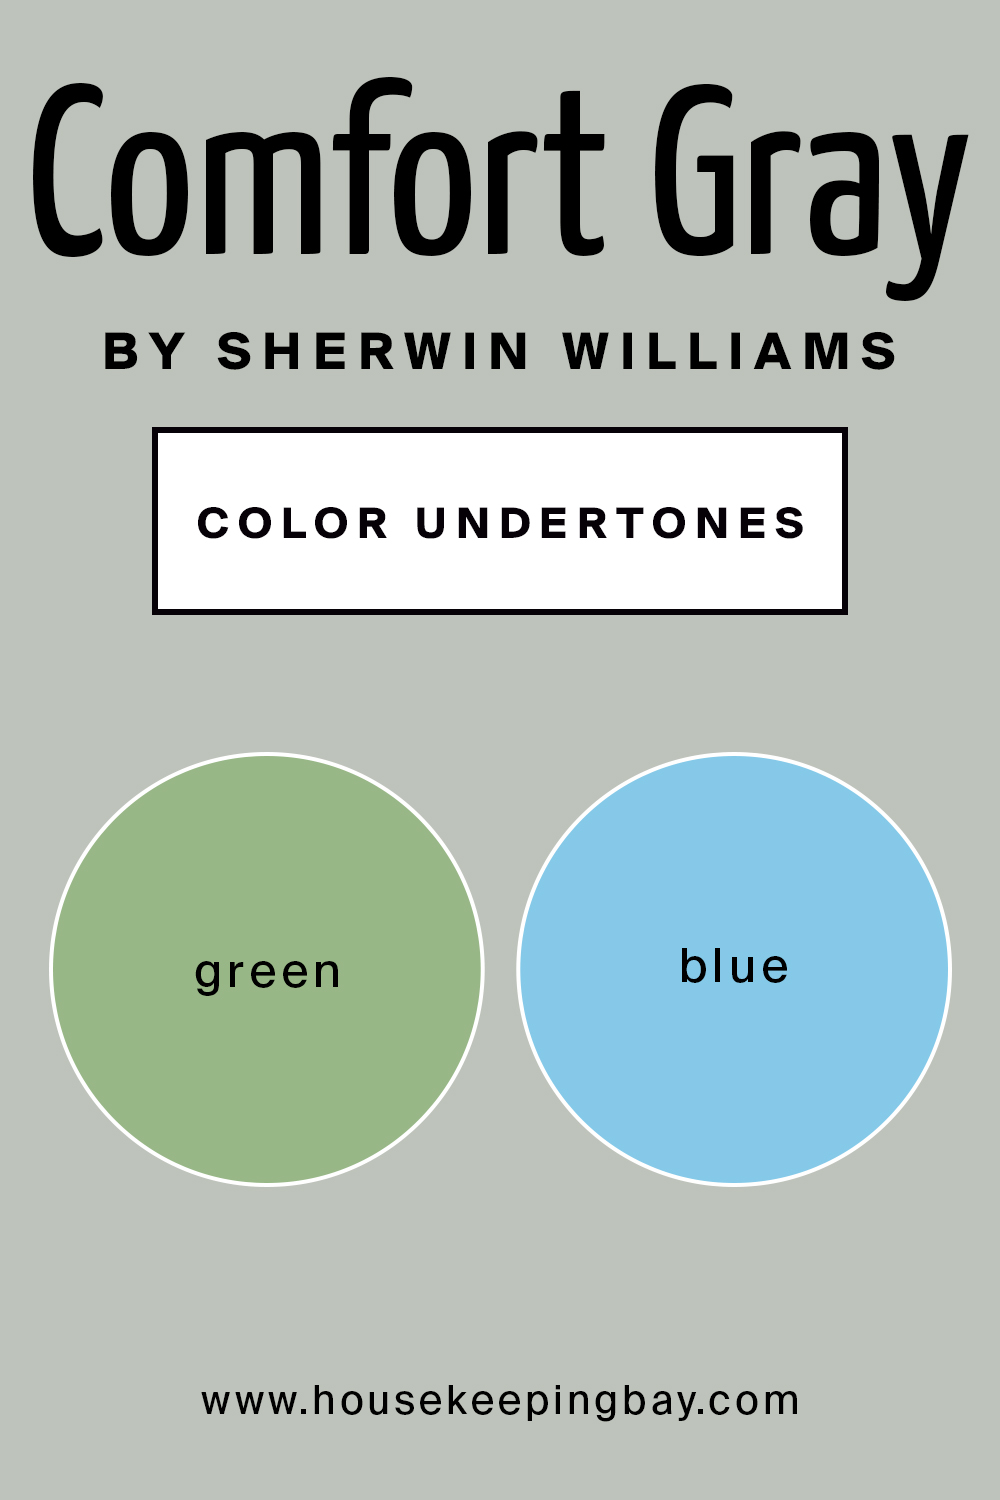 Comfort Gray by Sherwin Williams Color Undertones